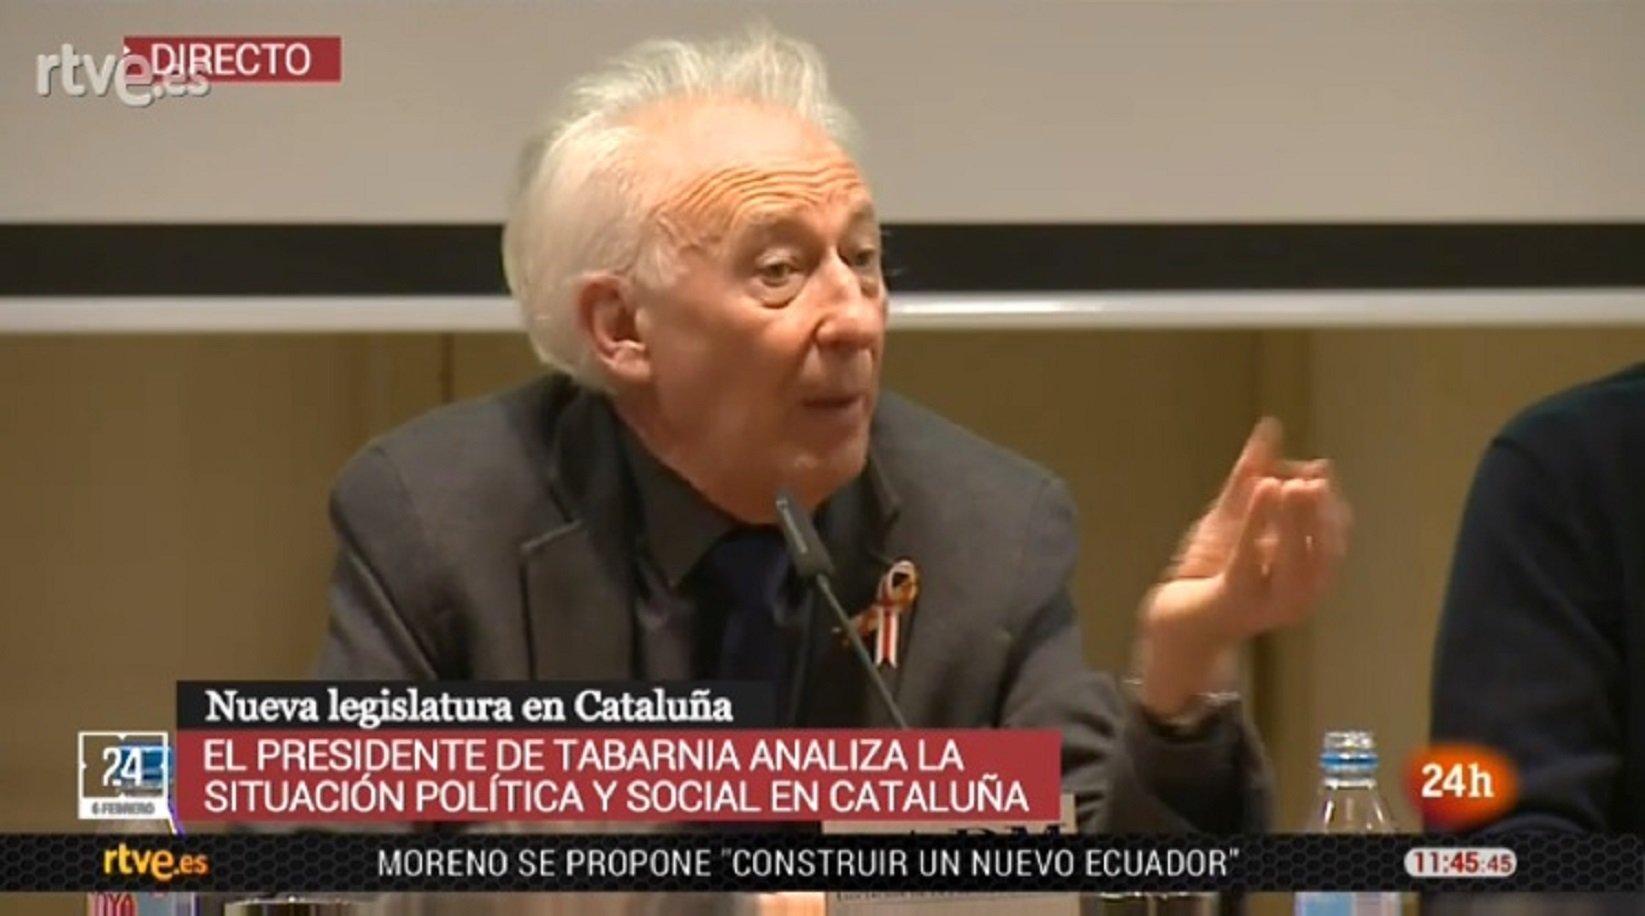 Spanish public TV presents Boadella (shamelessly) as president of Tabarnia